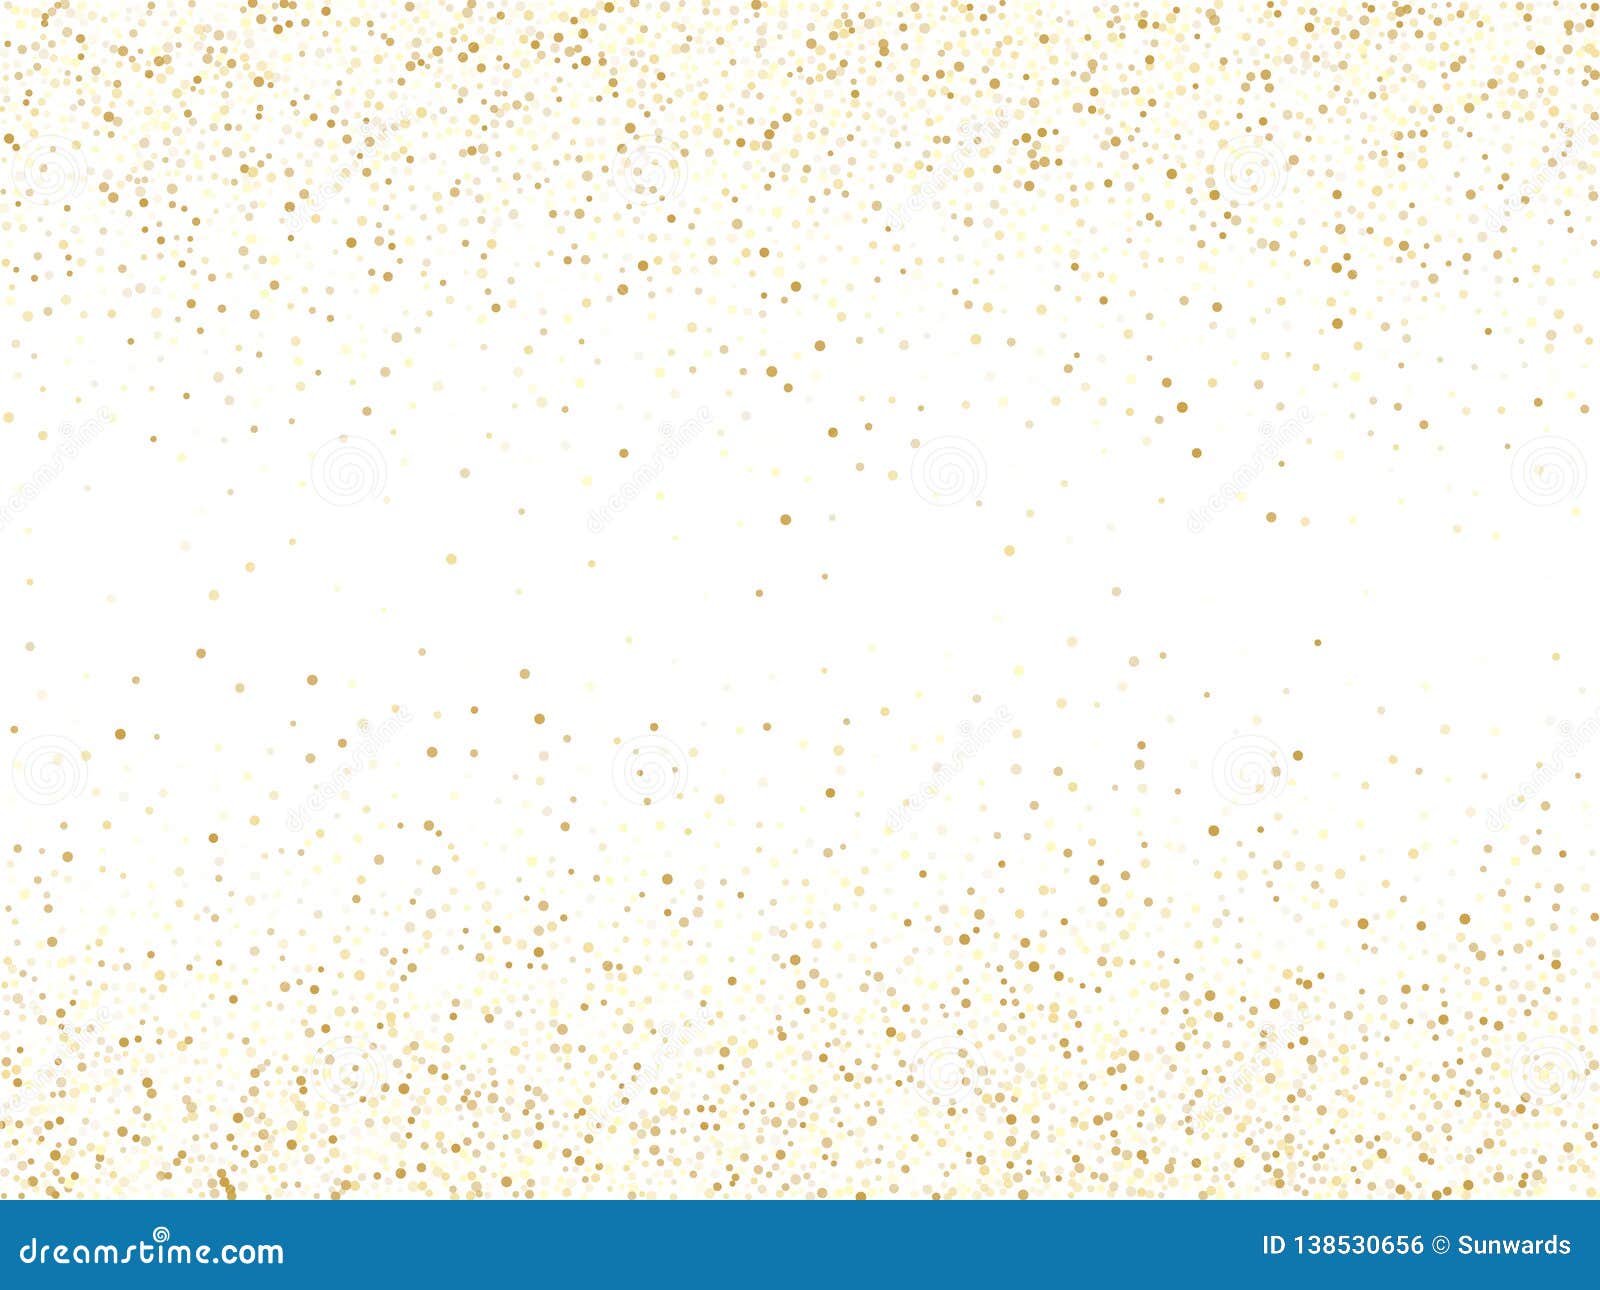 Gold Sparkles Glitter Dust Metallic Confetti On White Background Stock Illustration Illustration Of Celebrate Party 138530656